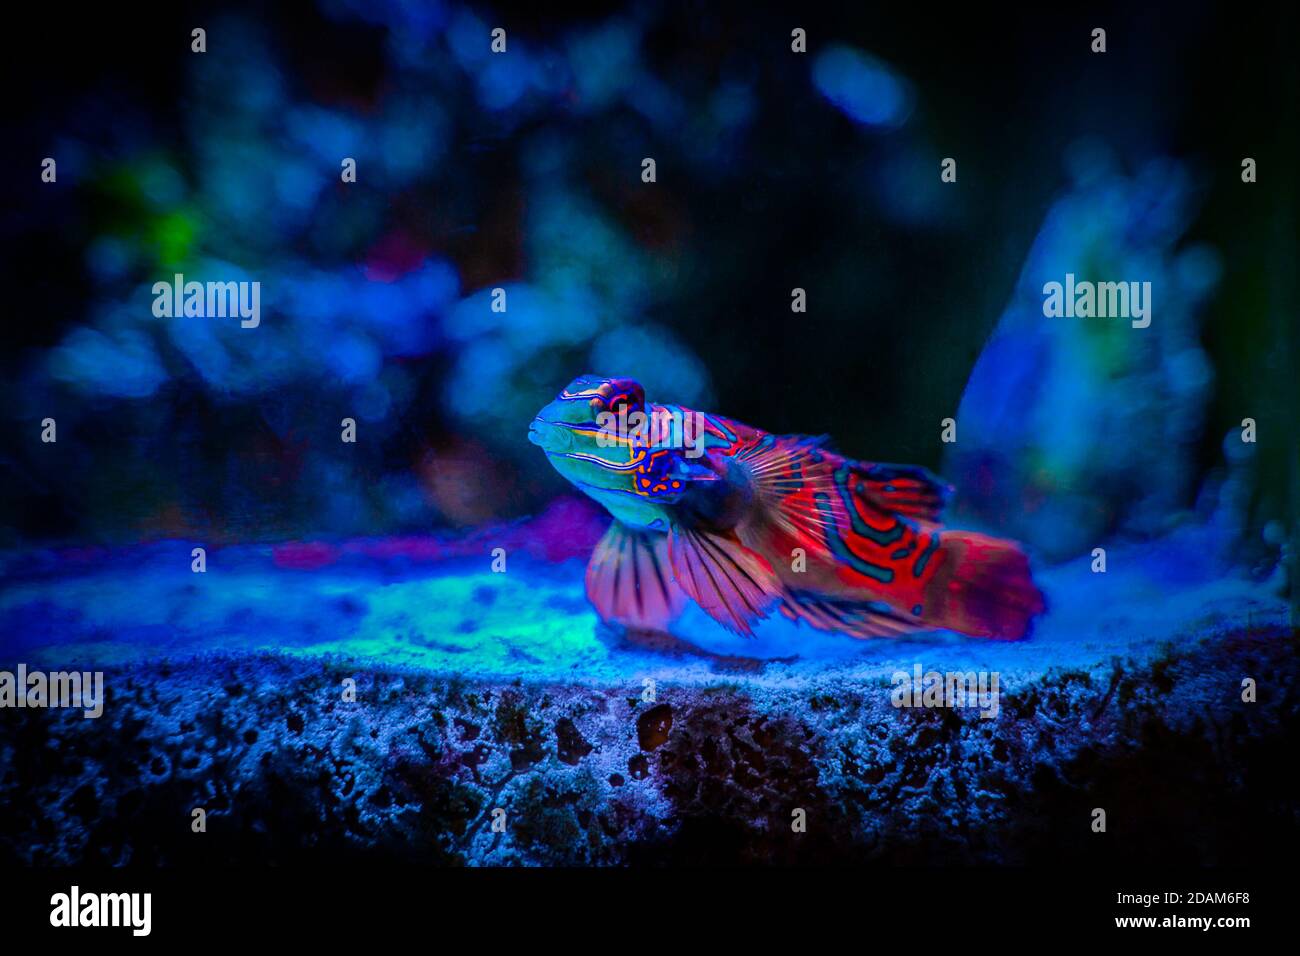 Mandarinfish or Mandarin dragonet (Synchiropus splendidus) isolated on a reef tank with blurred background Stock Photo